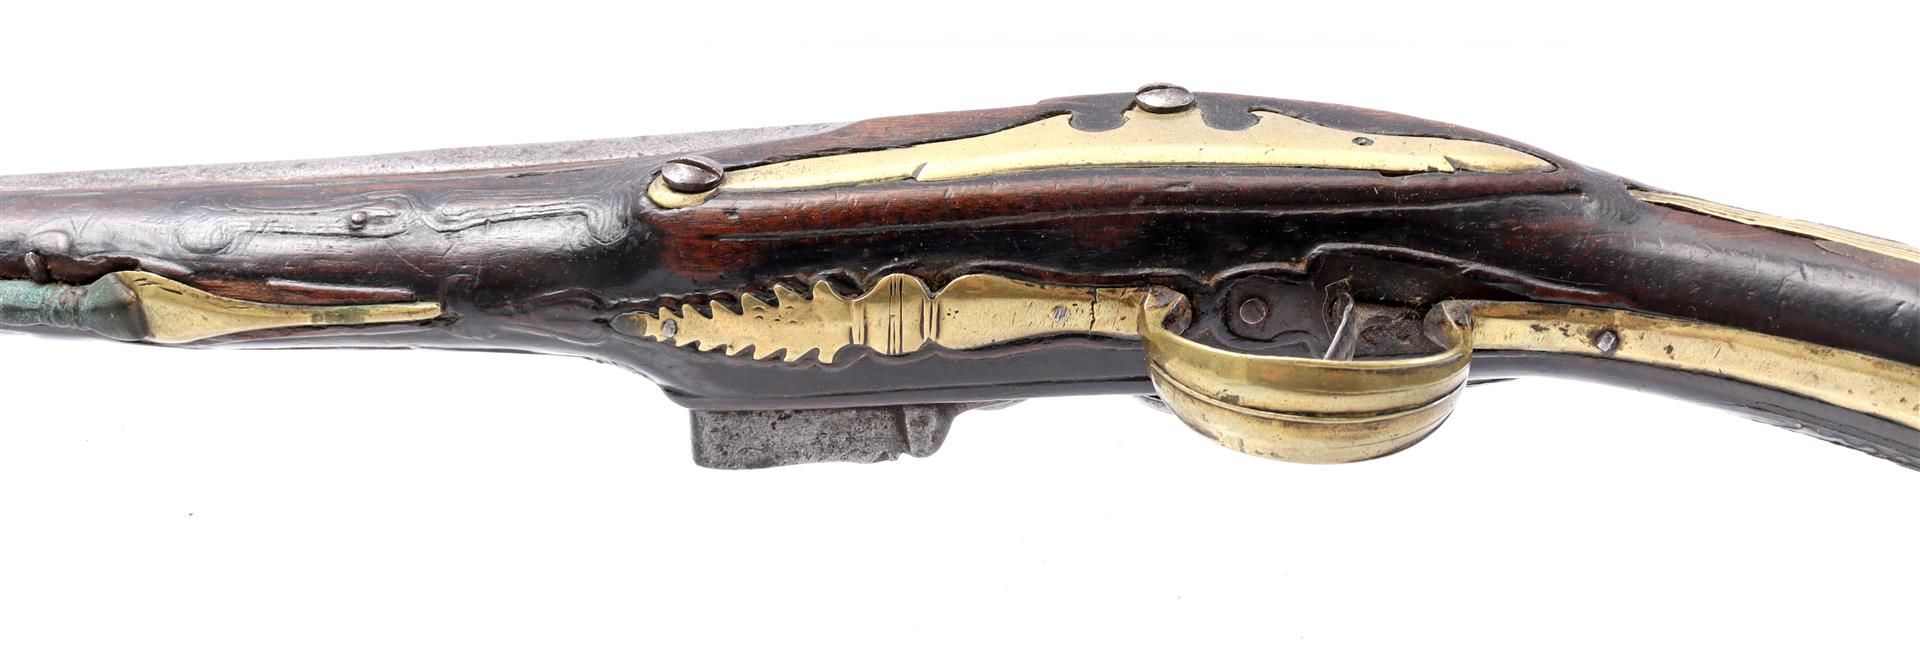 Walnut, brass and metal flint pistol - Image 8 of 8